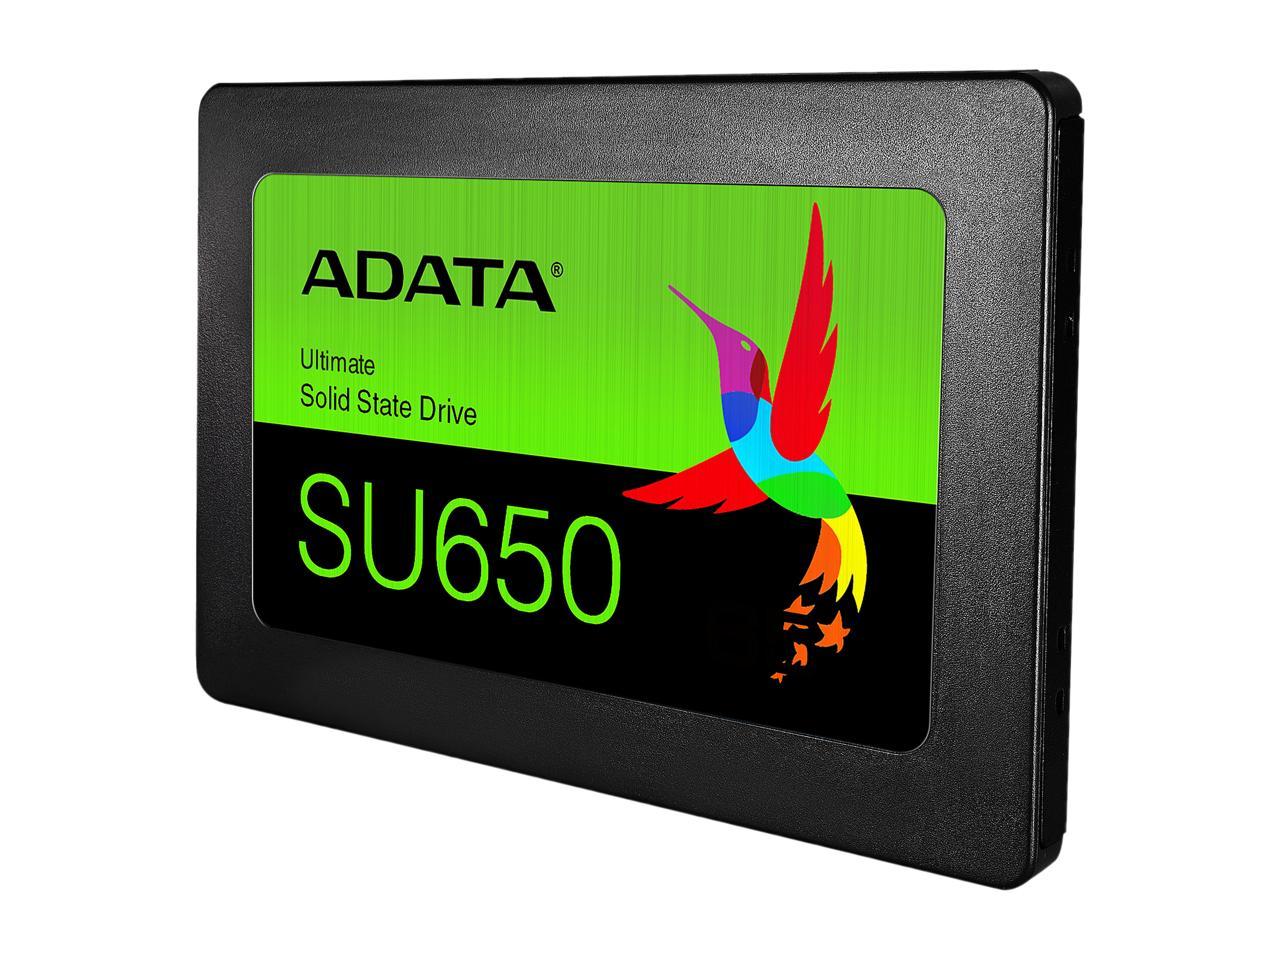 ADATA Ultimate SU650 2.5" 960GB SATA III 3D NAND Internal Solid State Drive (SSD) ASU650SS-960GT-R